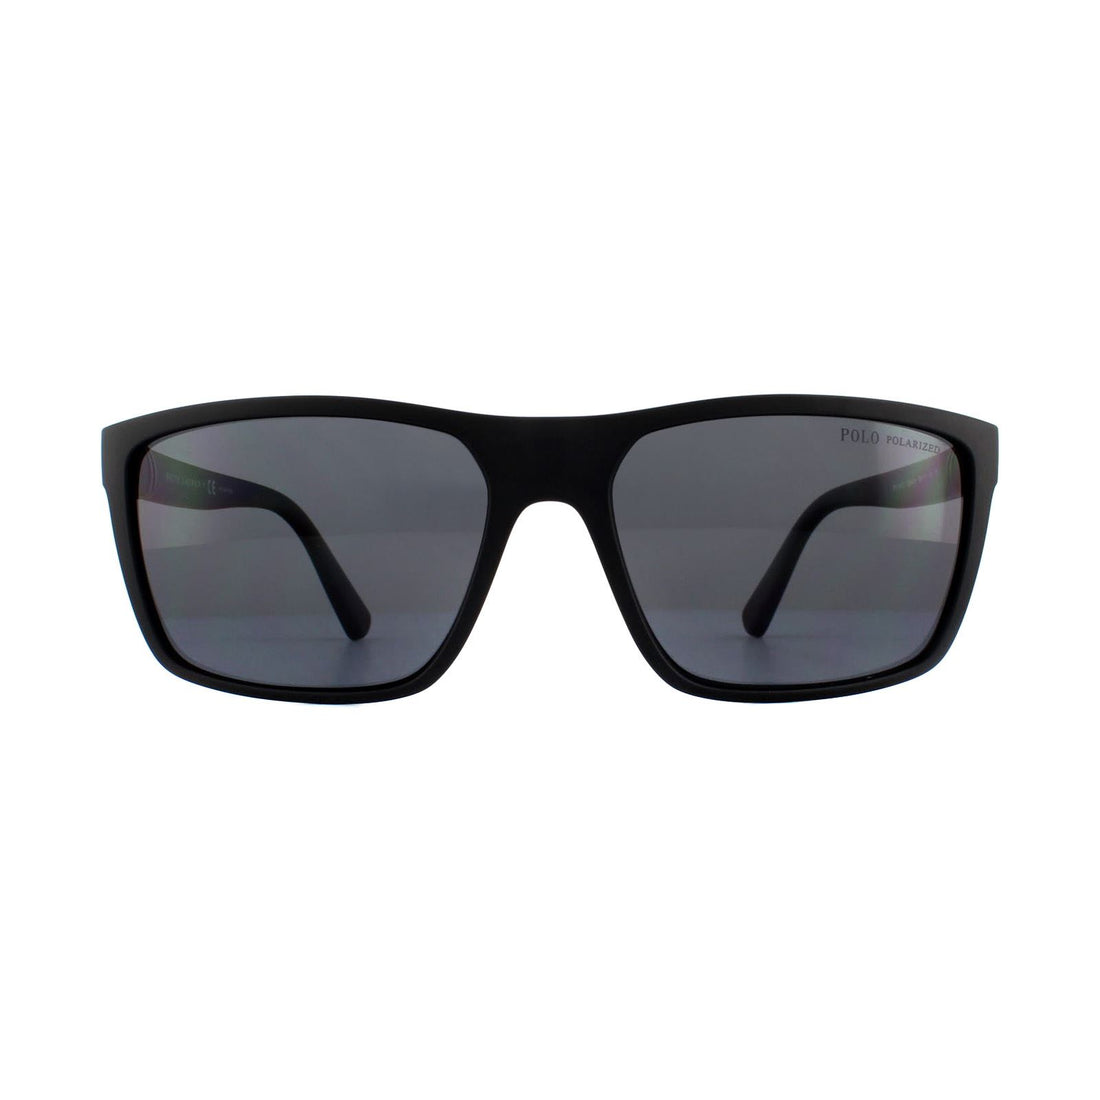 Polo Ralph Lauren PH4133 Sunglasses Black Grey Polarized